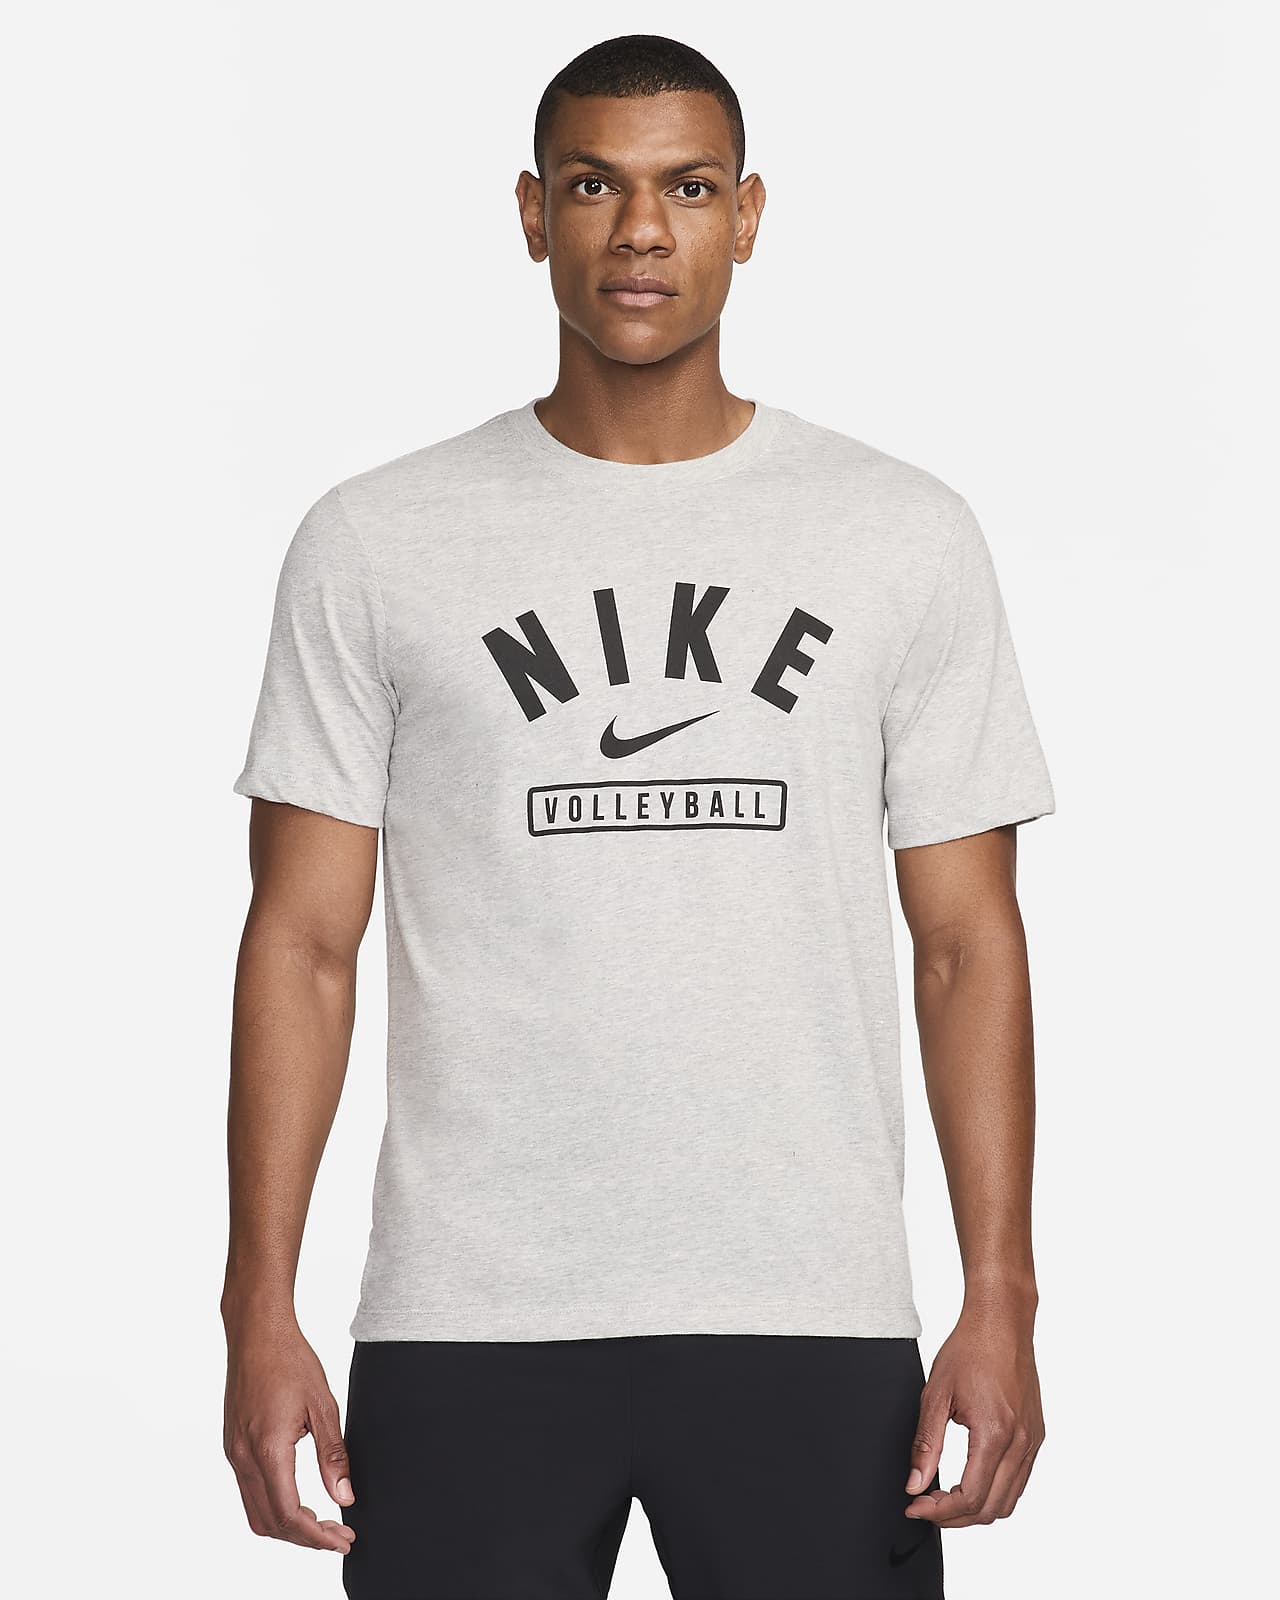 Nike Men's Volleyball T-Shirt